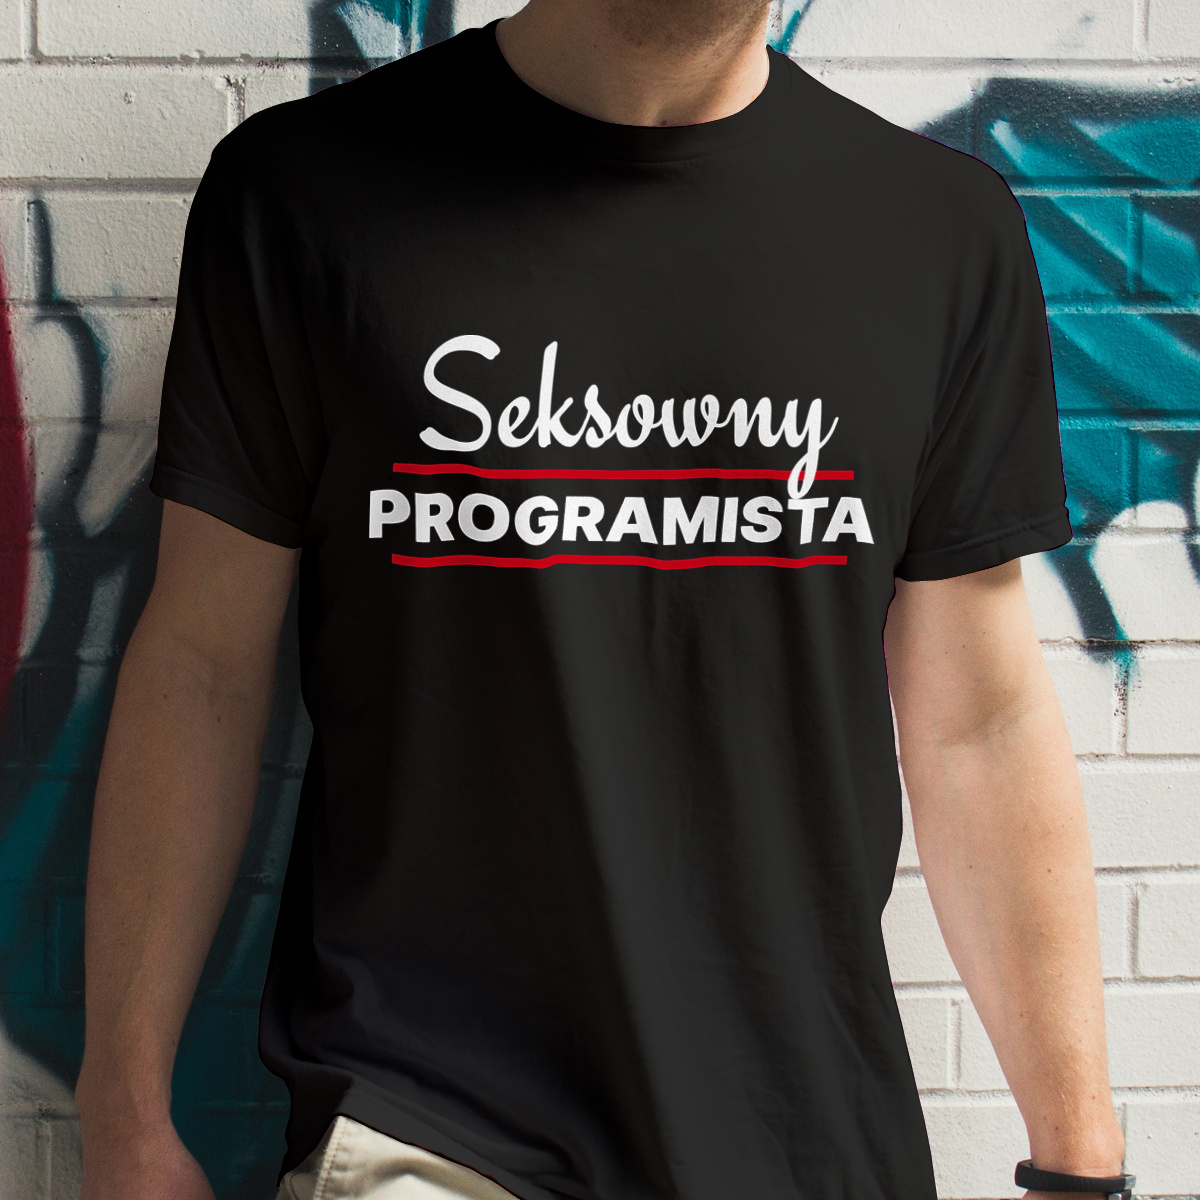 Seksowny Programista - Męska Koszulka Czarna